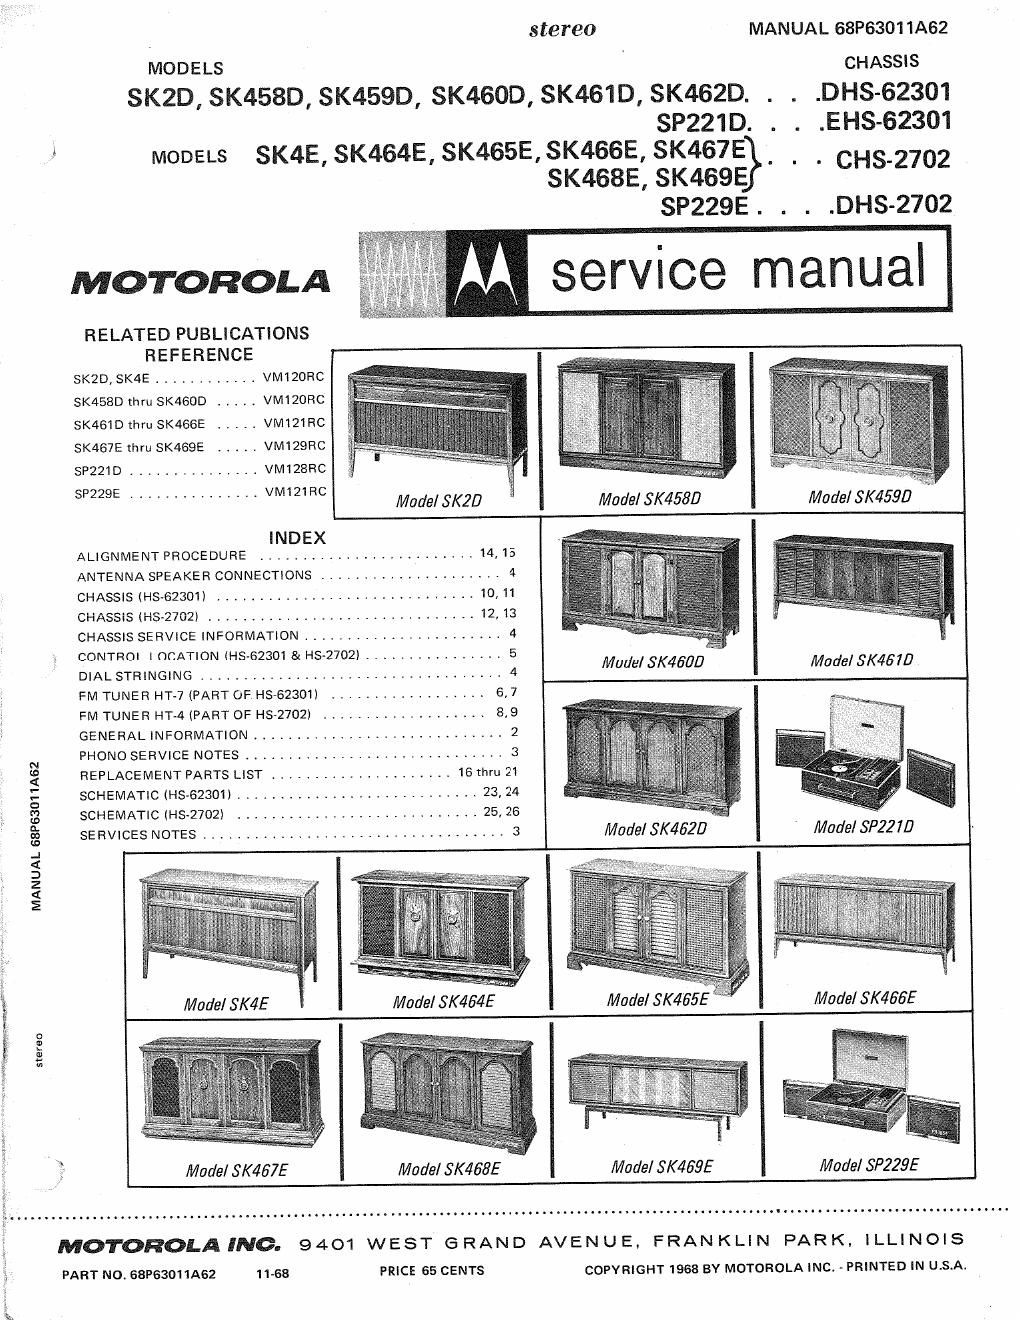 motorola sp 221 d service manual